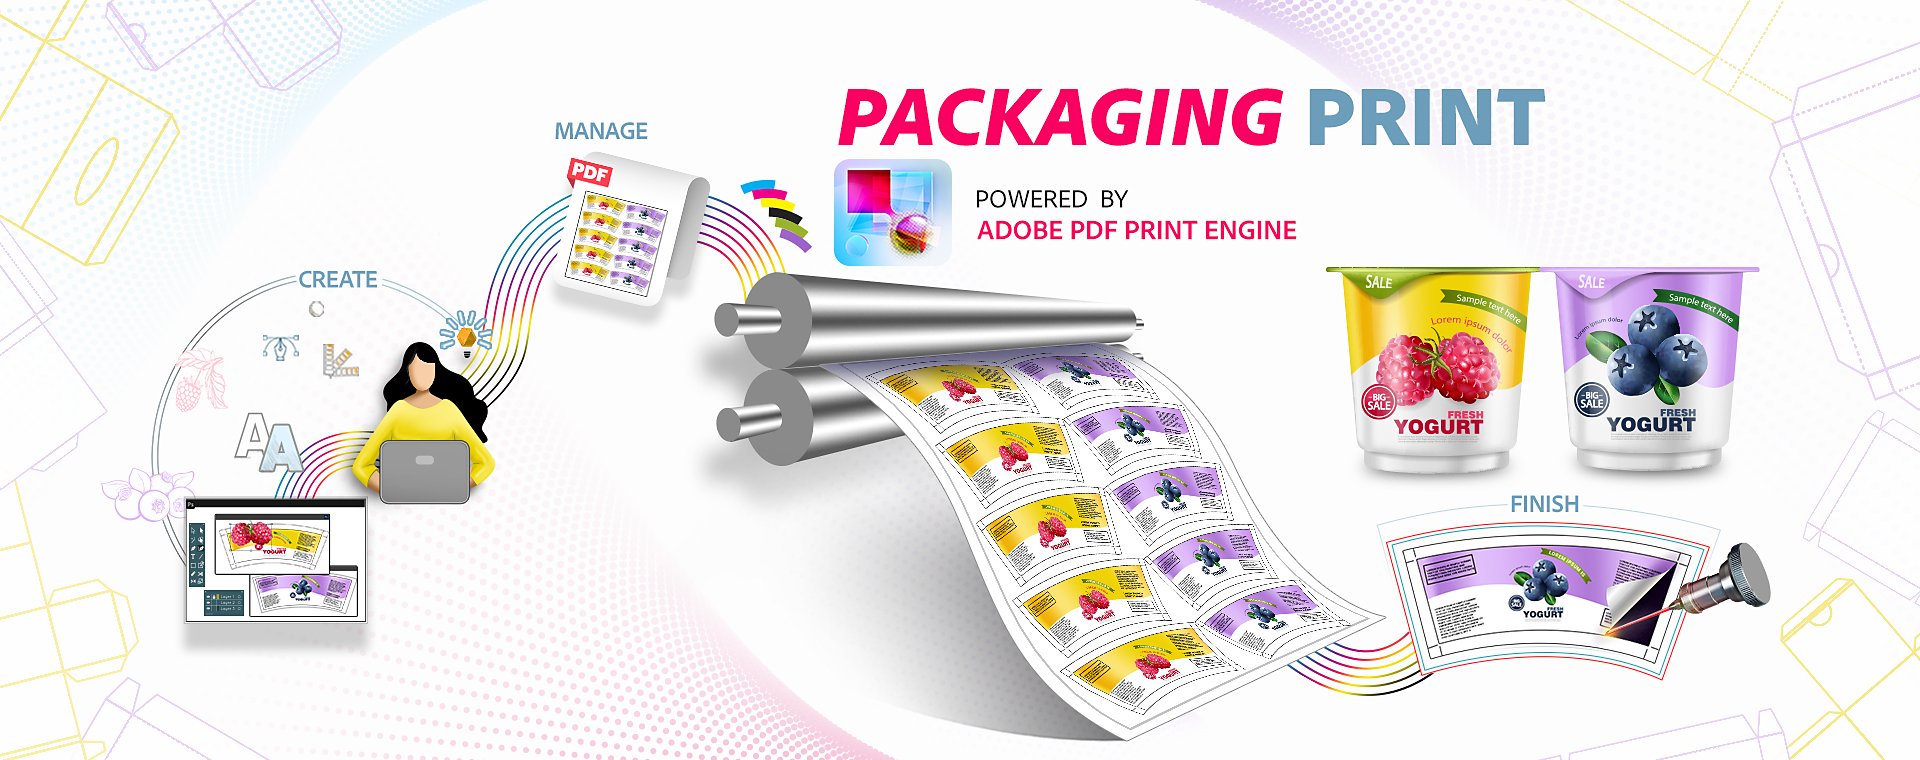 rent craft tilbagemeldinger Adobe PDF Print Engine for Packaging Printing